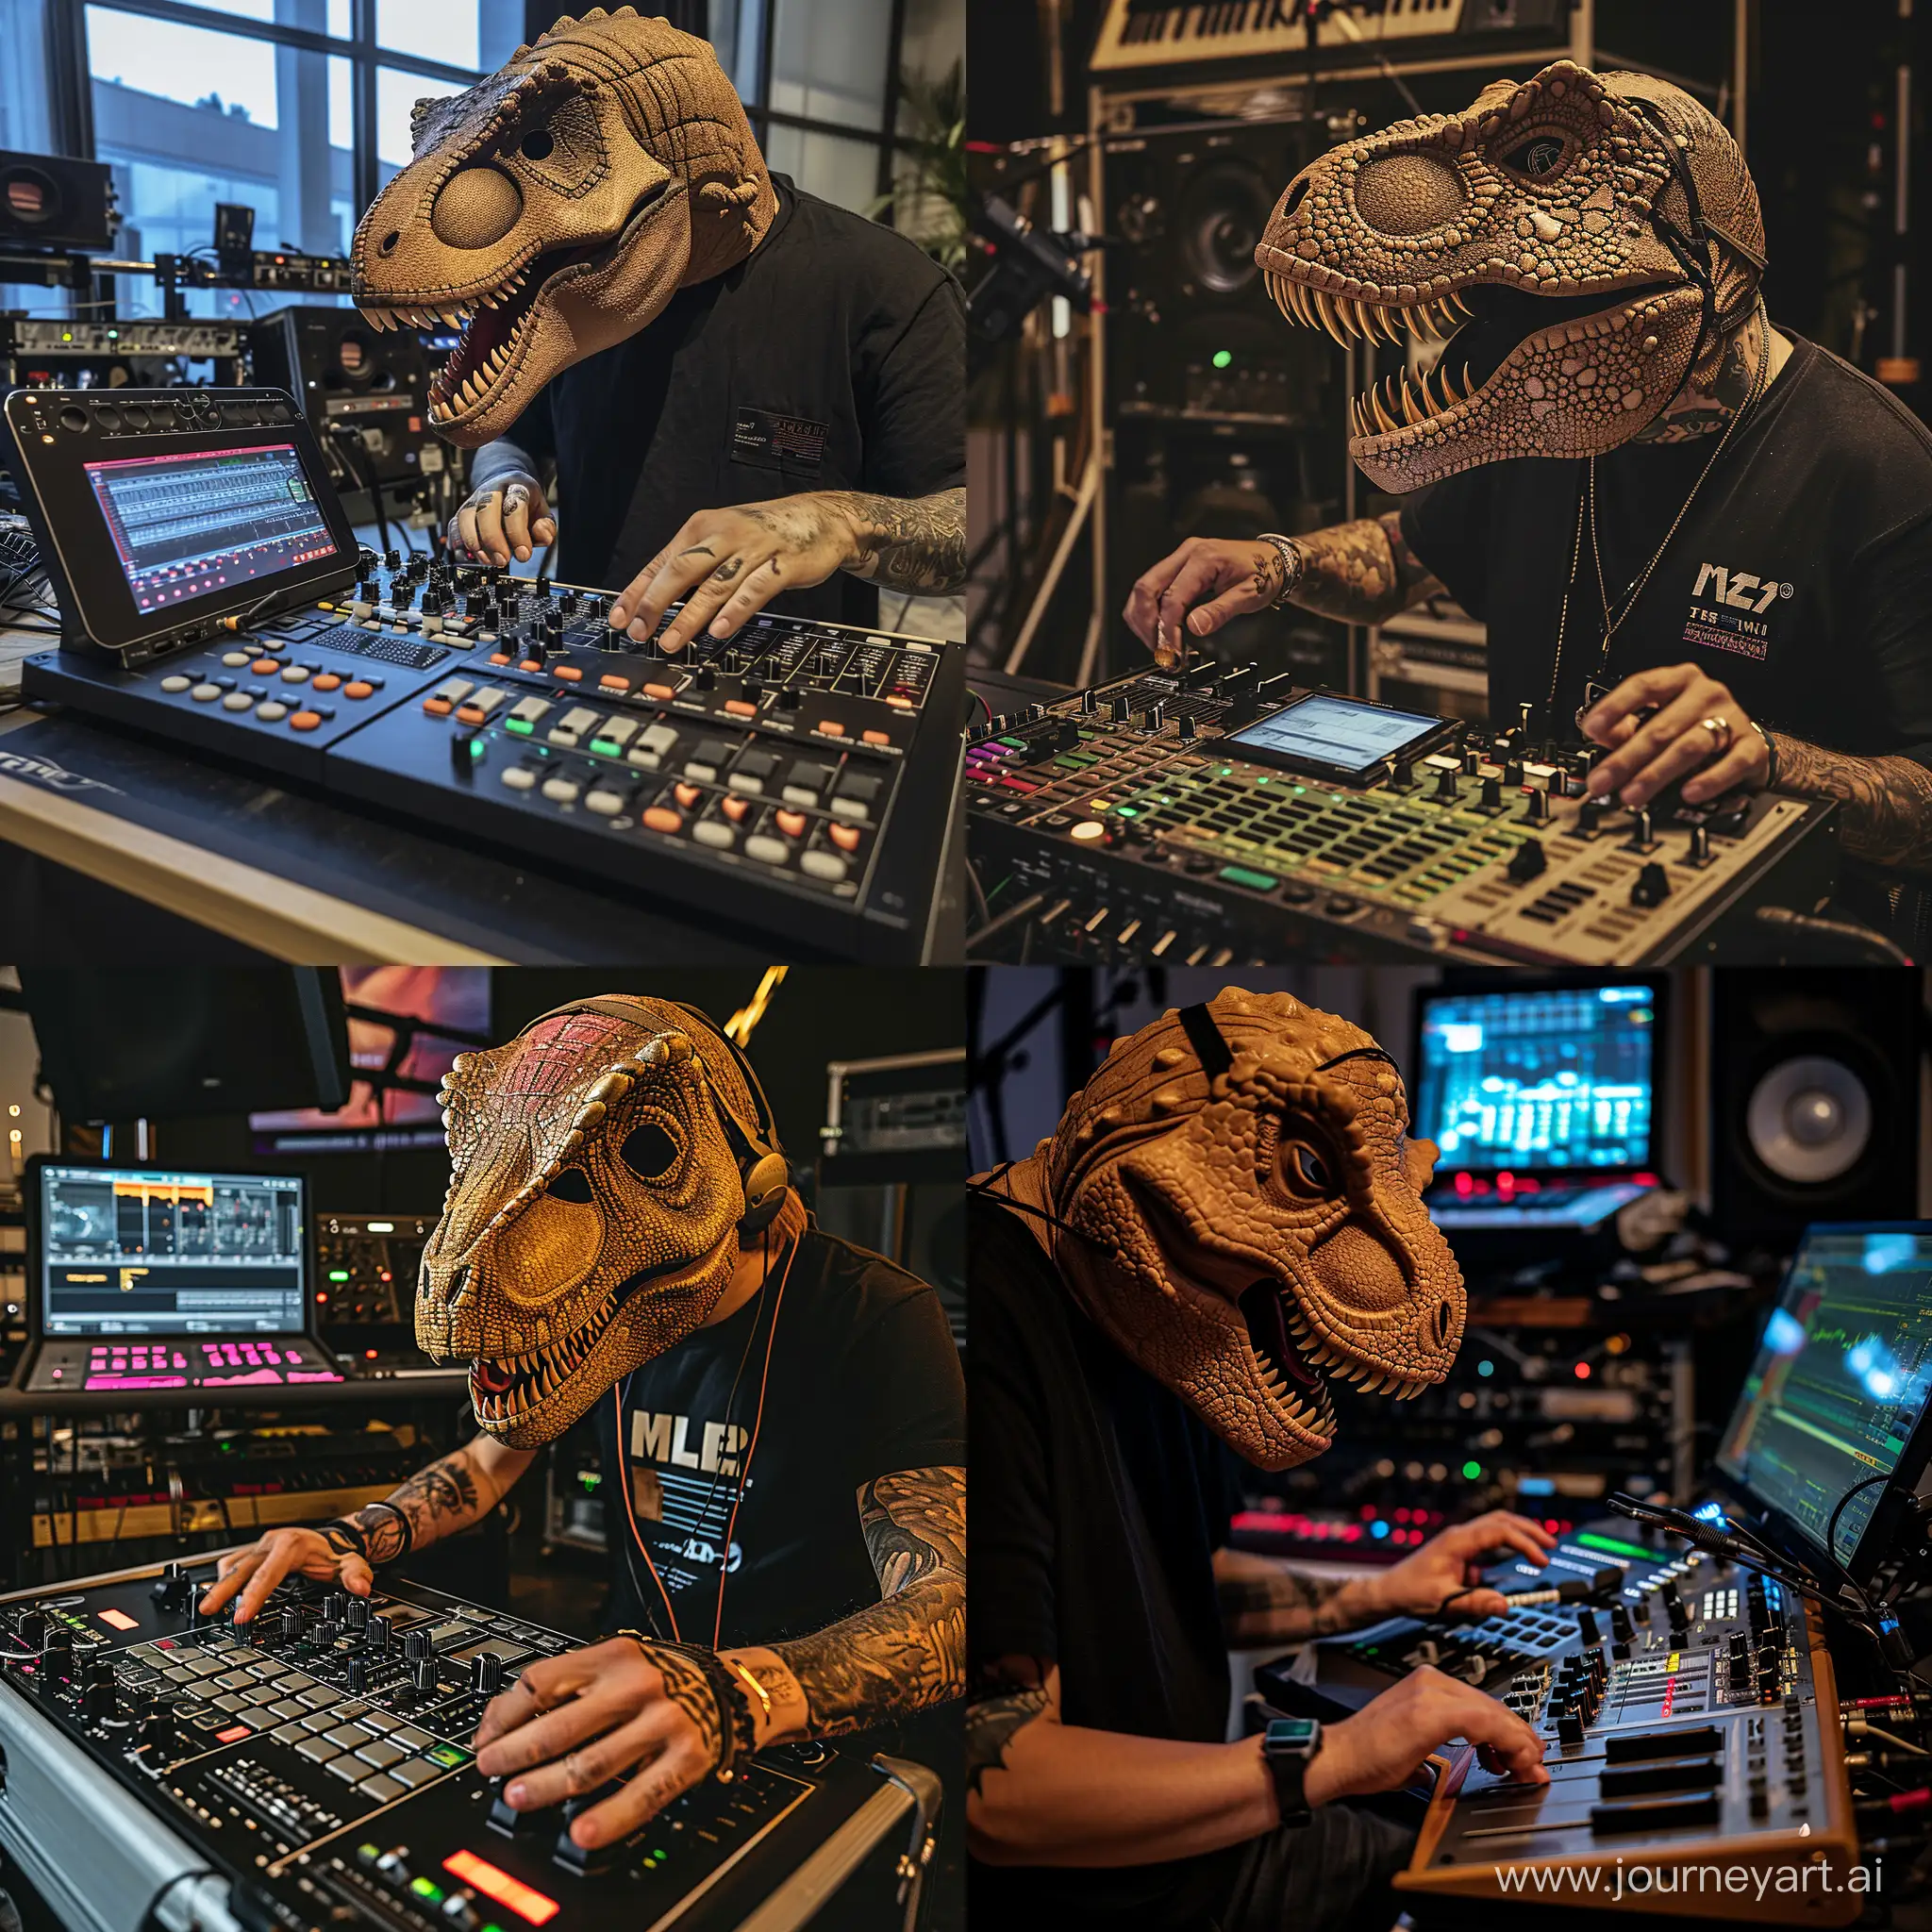 TRex-Masked-Man-Creating-Music-on-Distinctive-Drum-Controller-in-Studio